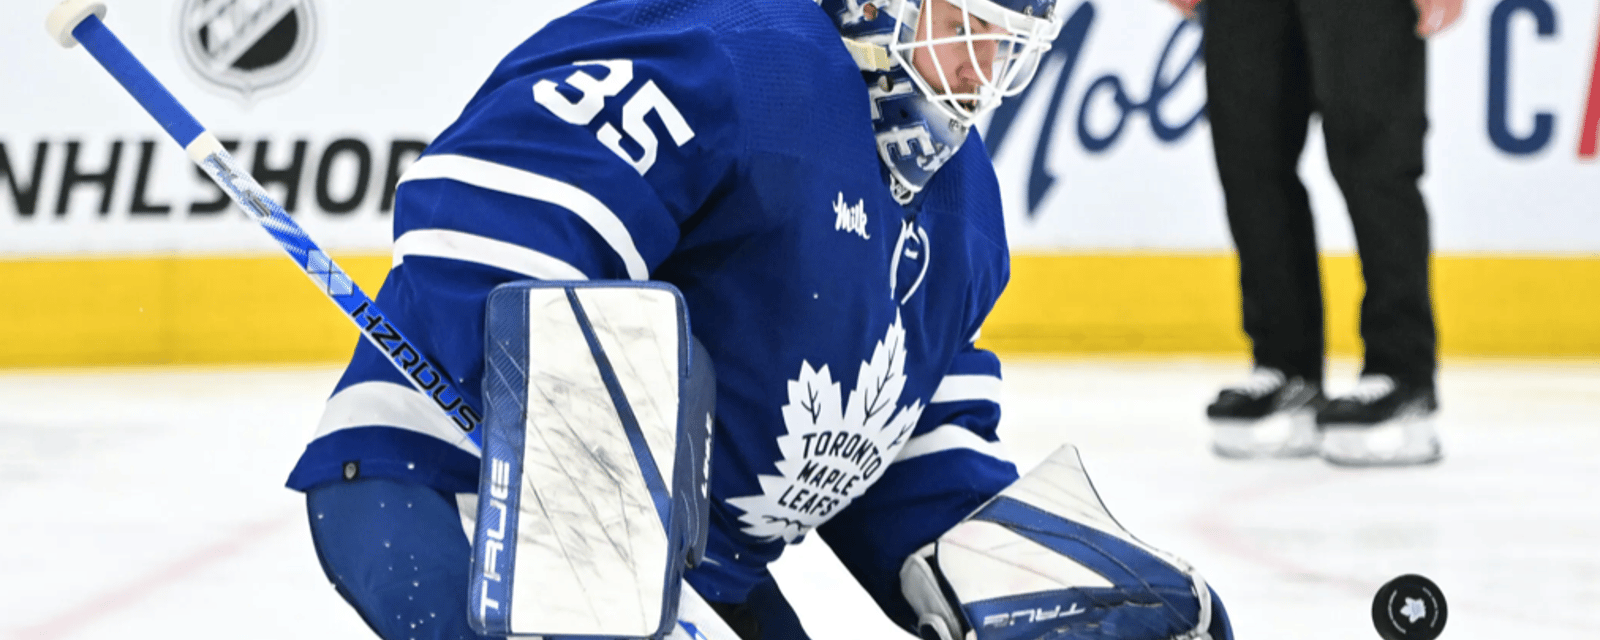 Crucial update released on Leafs' Ilya Samsonov